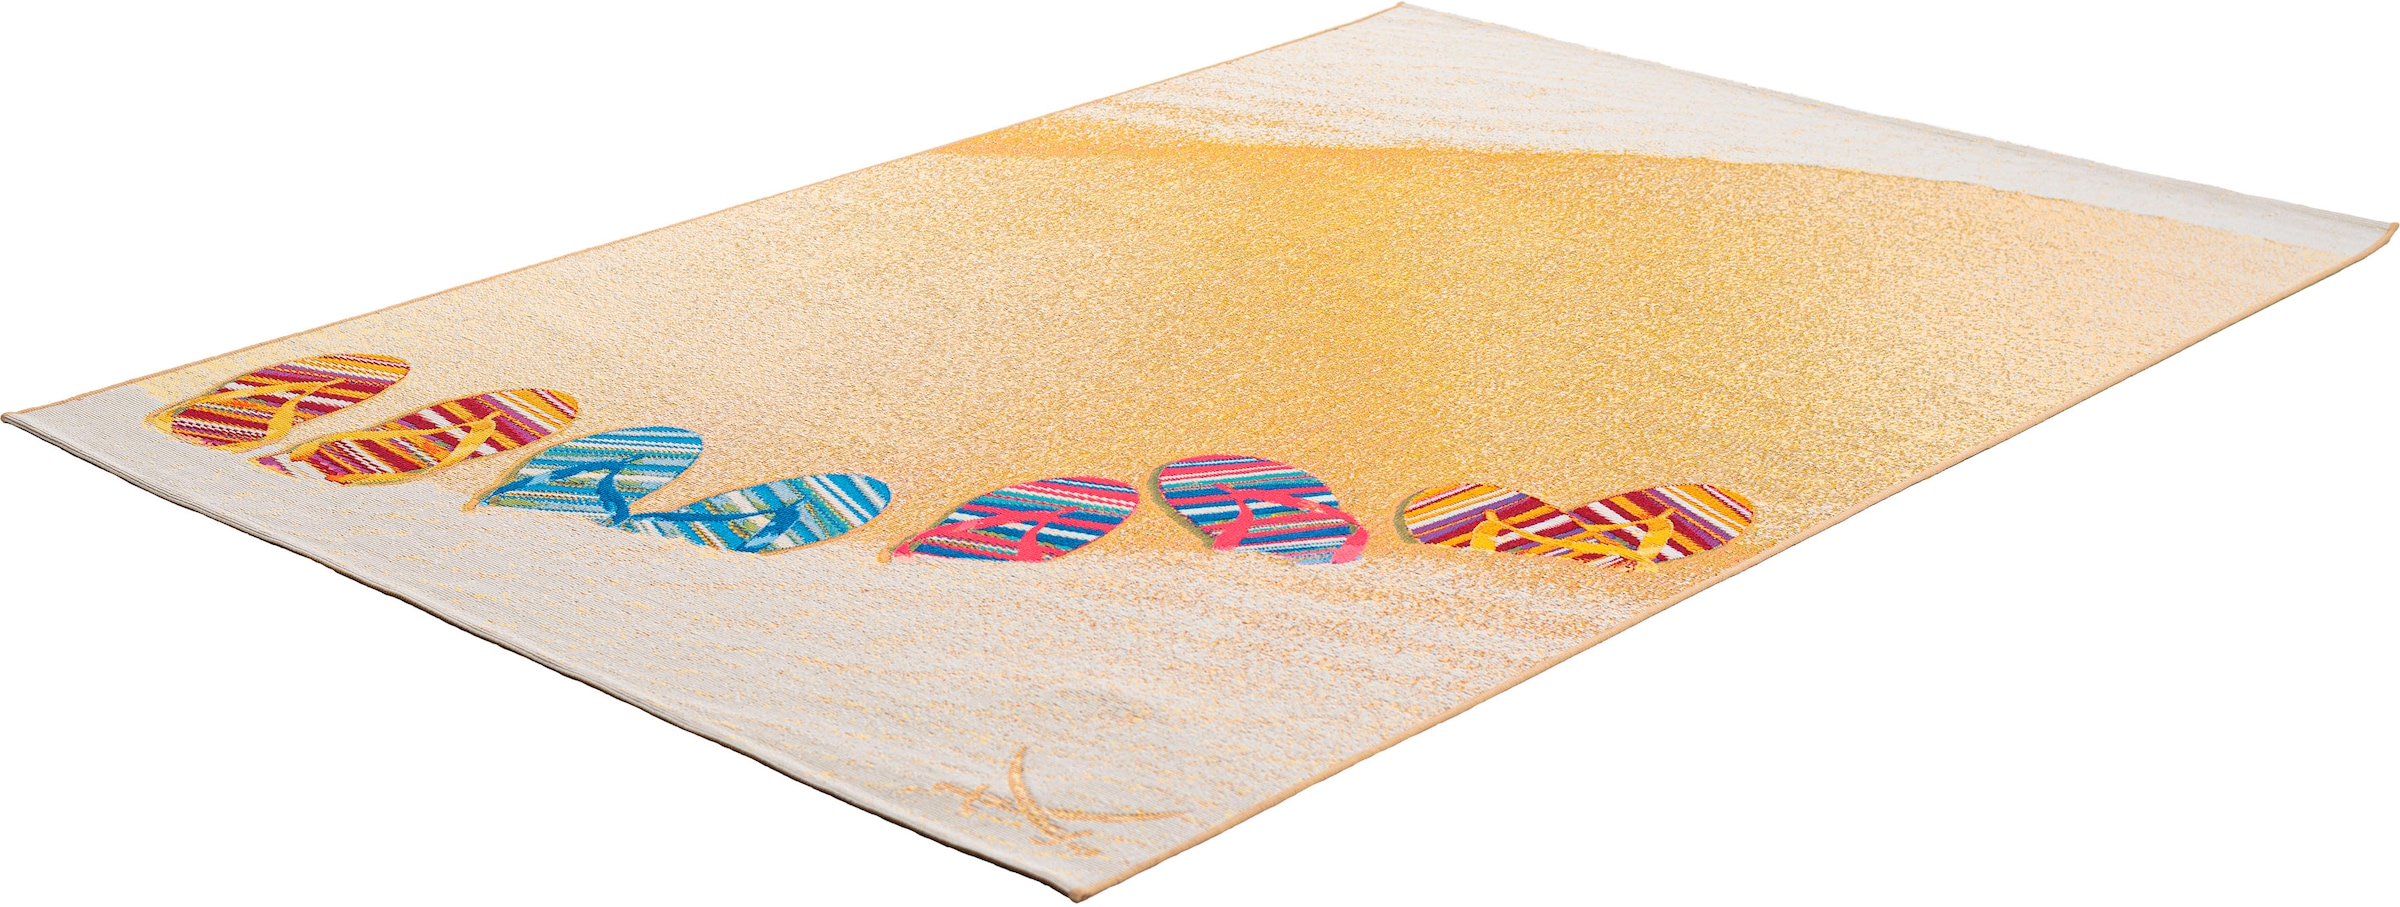 Alle Sansibar Teppich »Rantum OTTO SA-017«, Motiv Outdoor Design, Badelatschen, rechteckig, bei Beach modernes Flachgewebe, geeignet